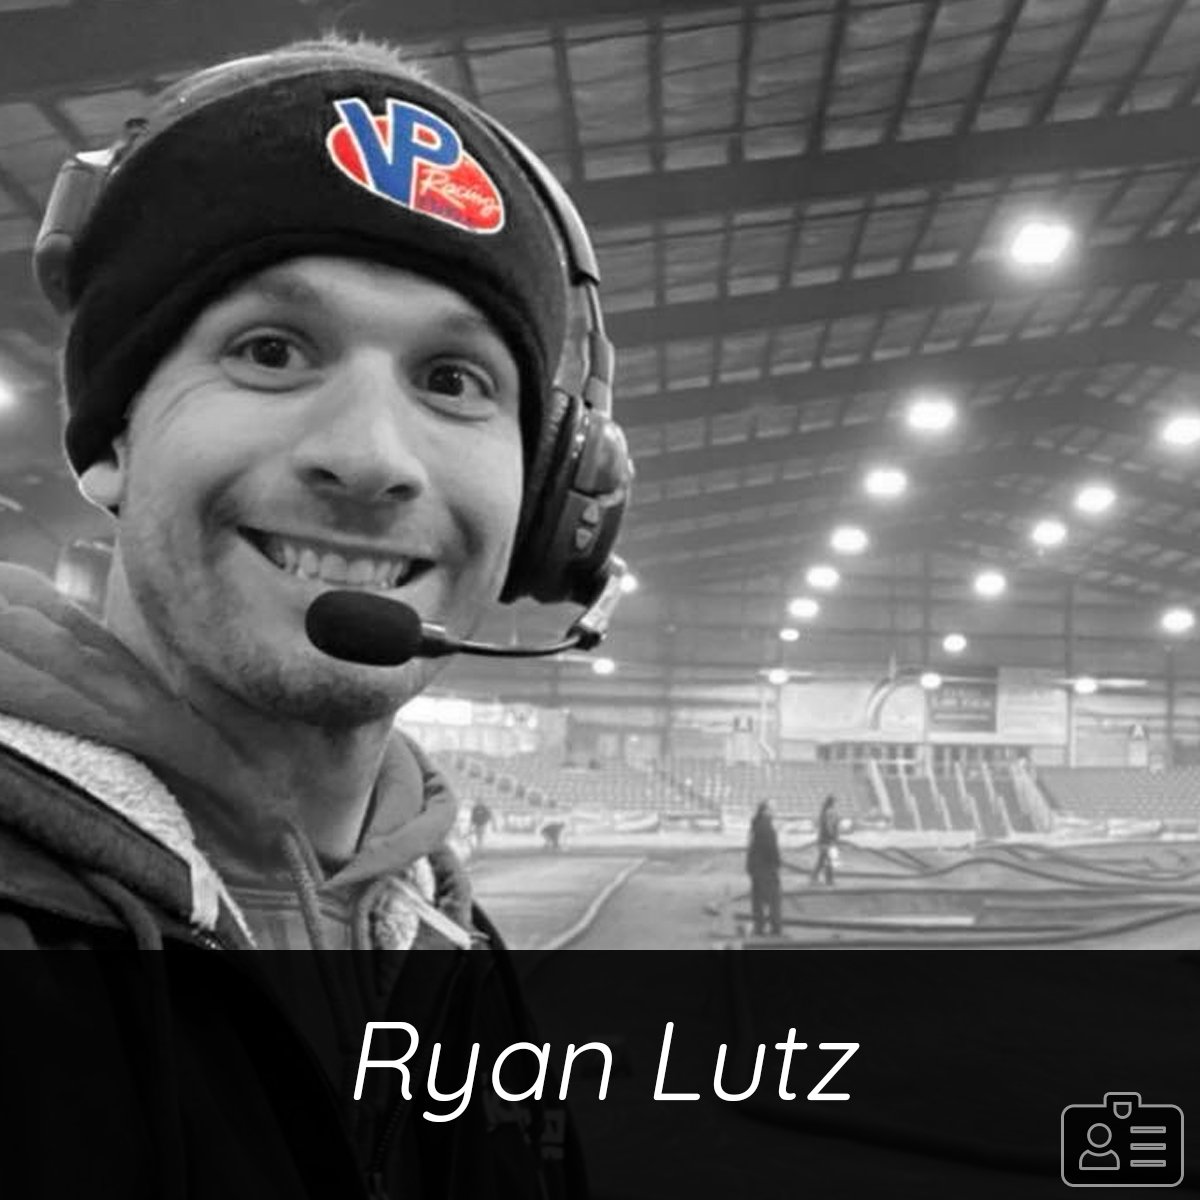 Ryan Lutz - RC Racer - ProTek Pro Team